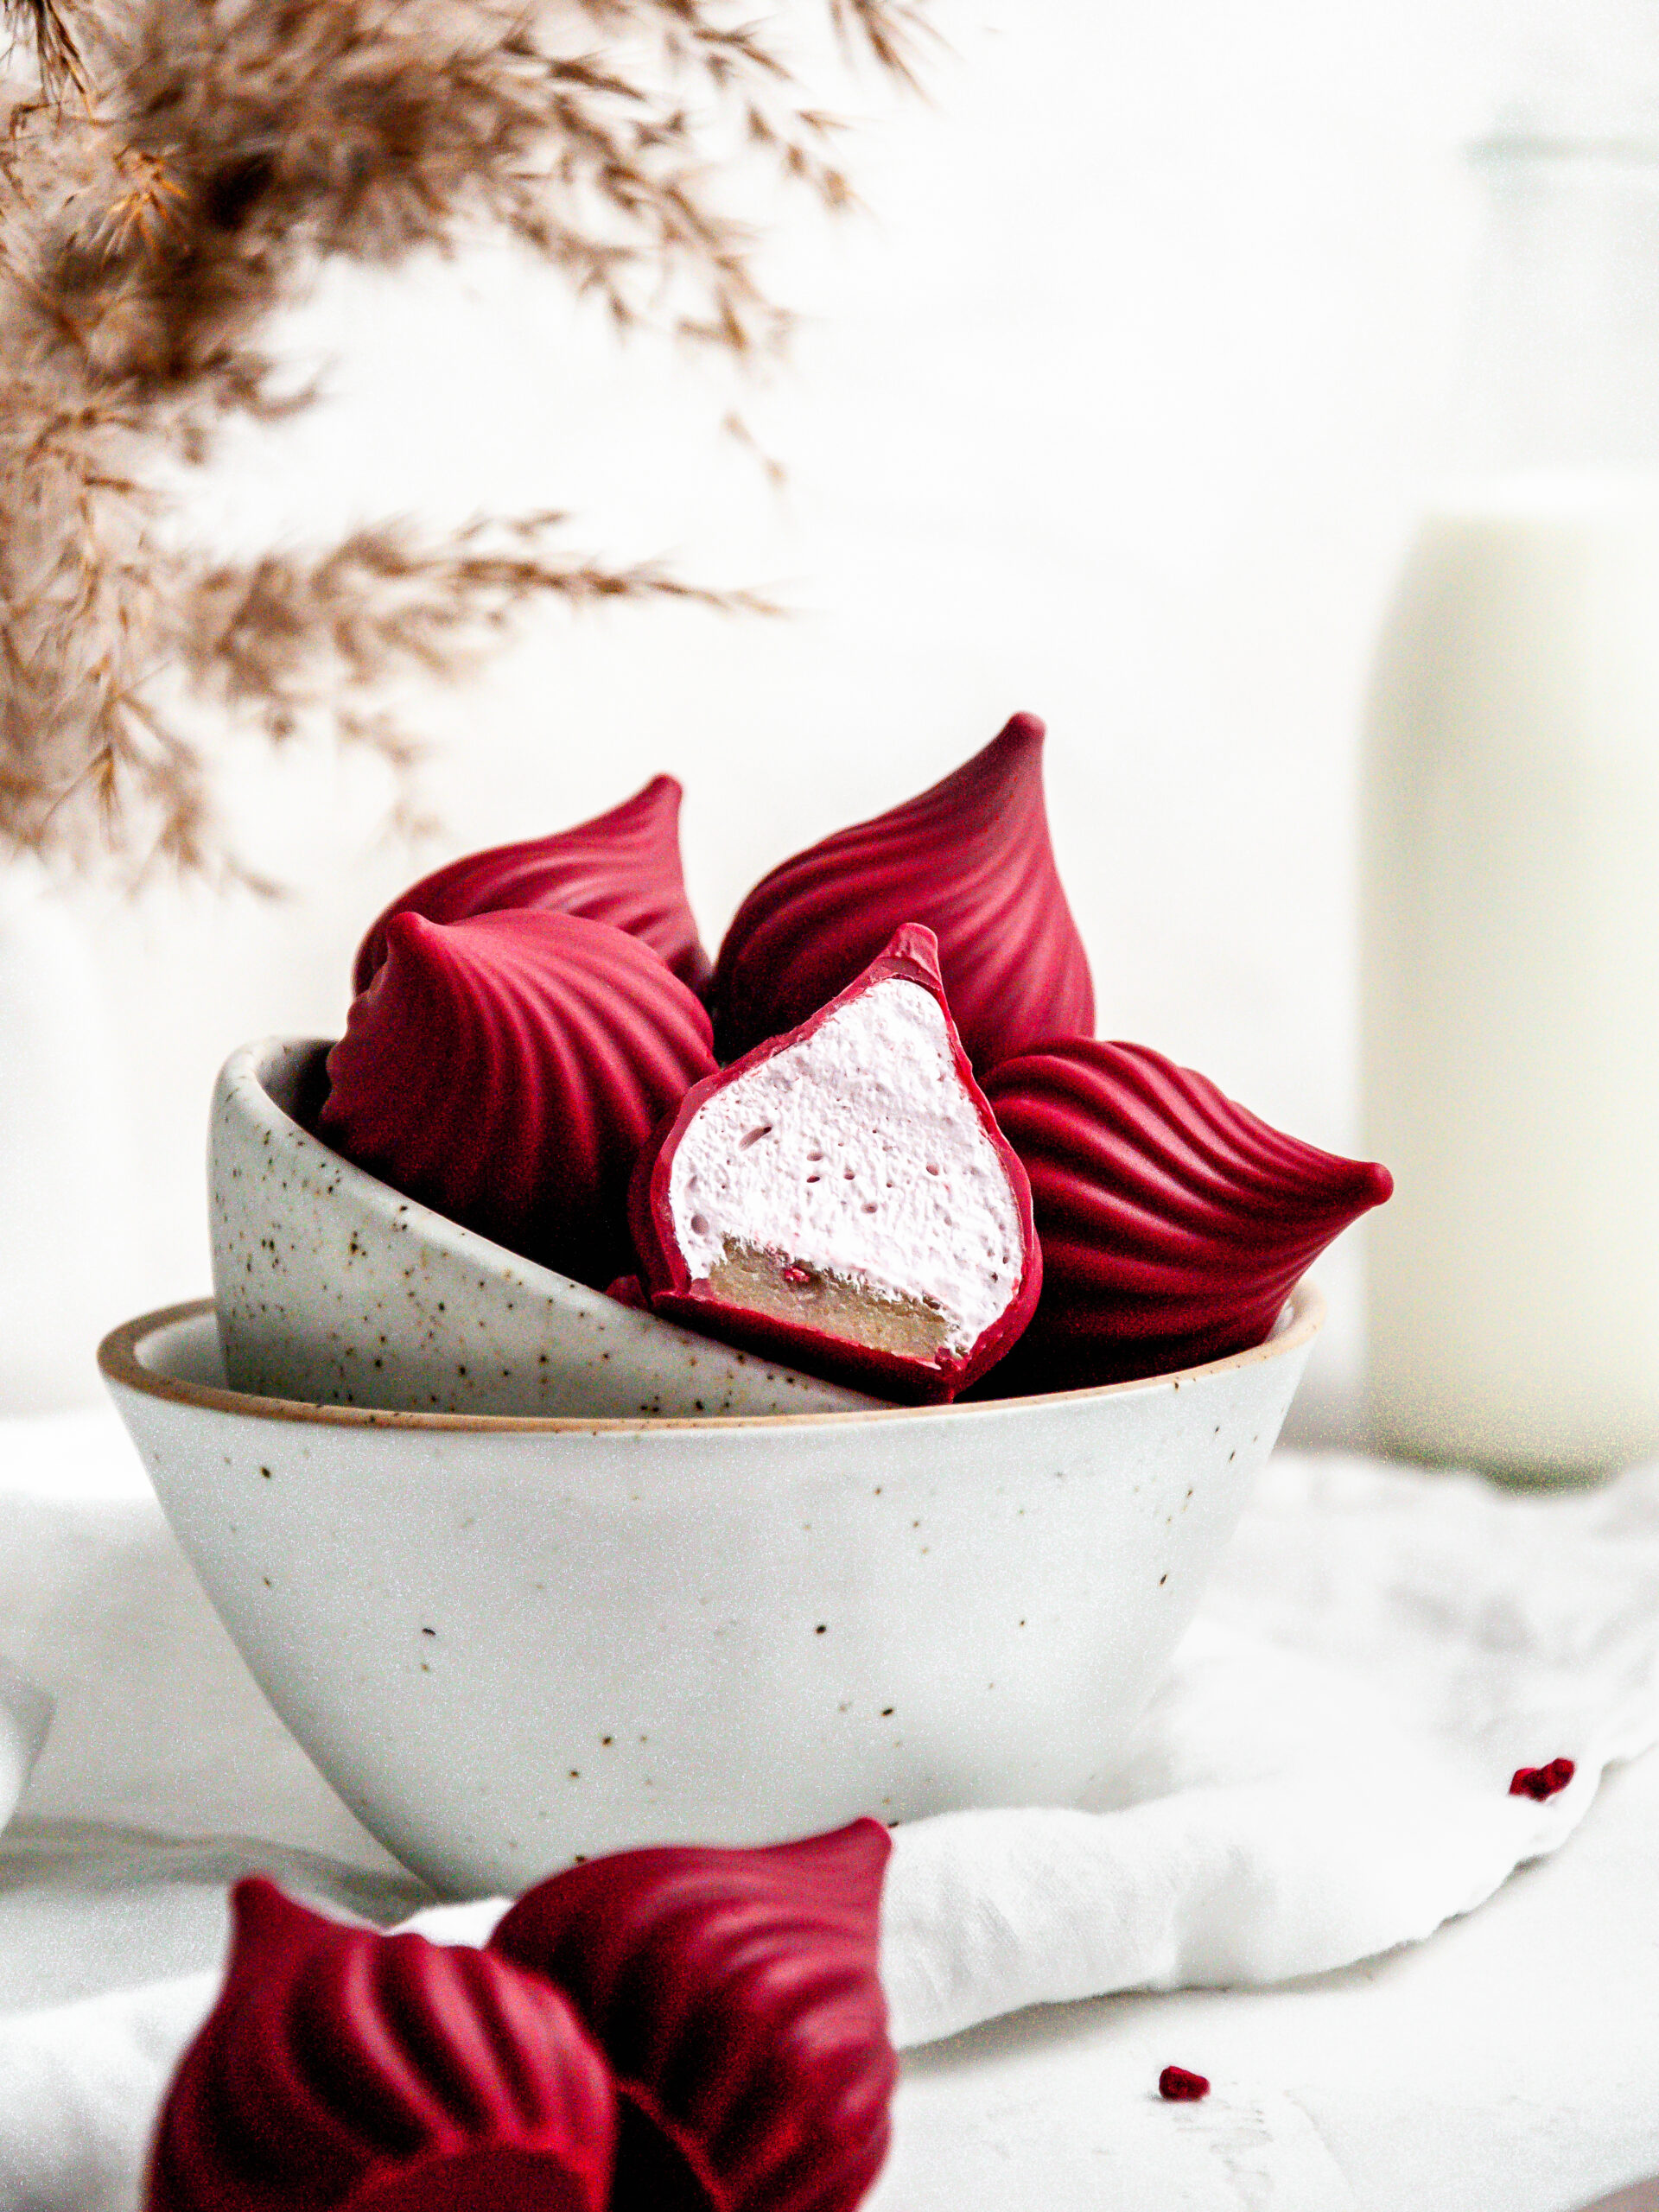 raspberry cream puffs in a bowl.